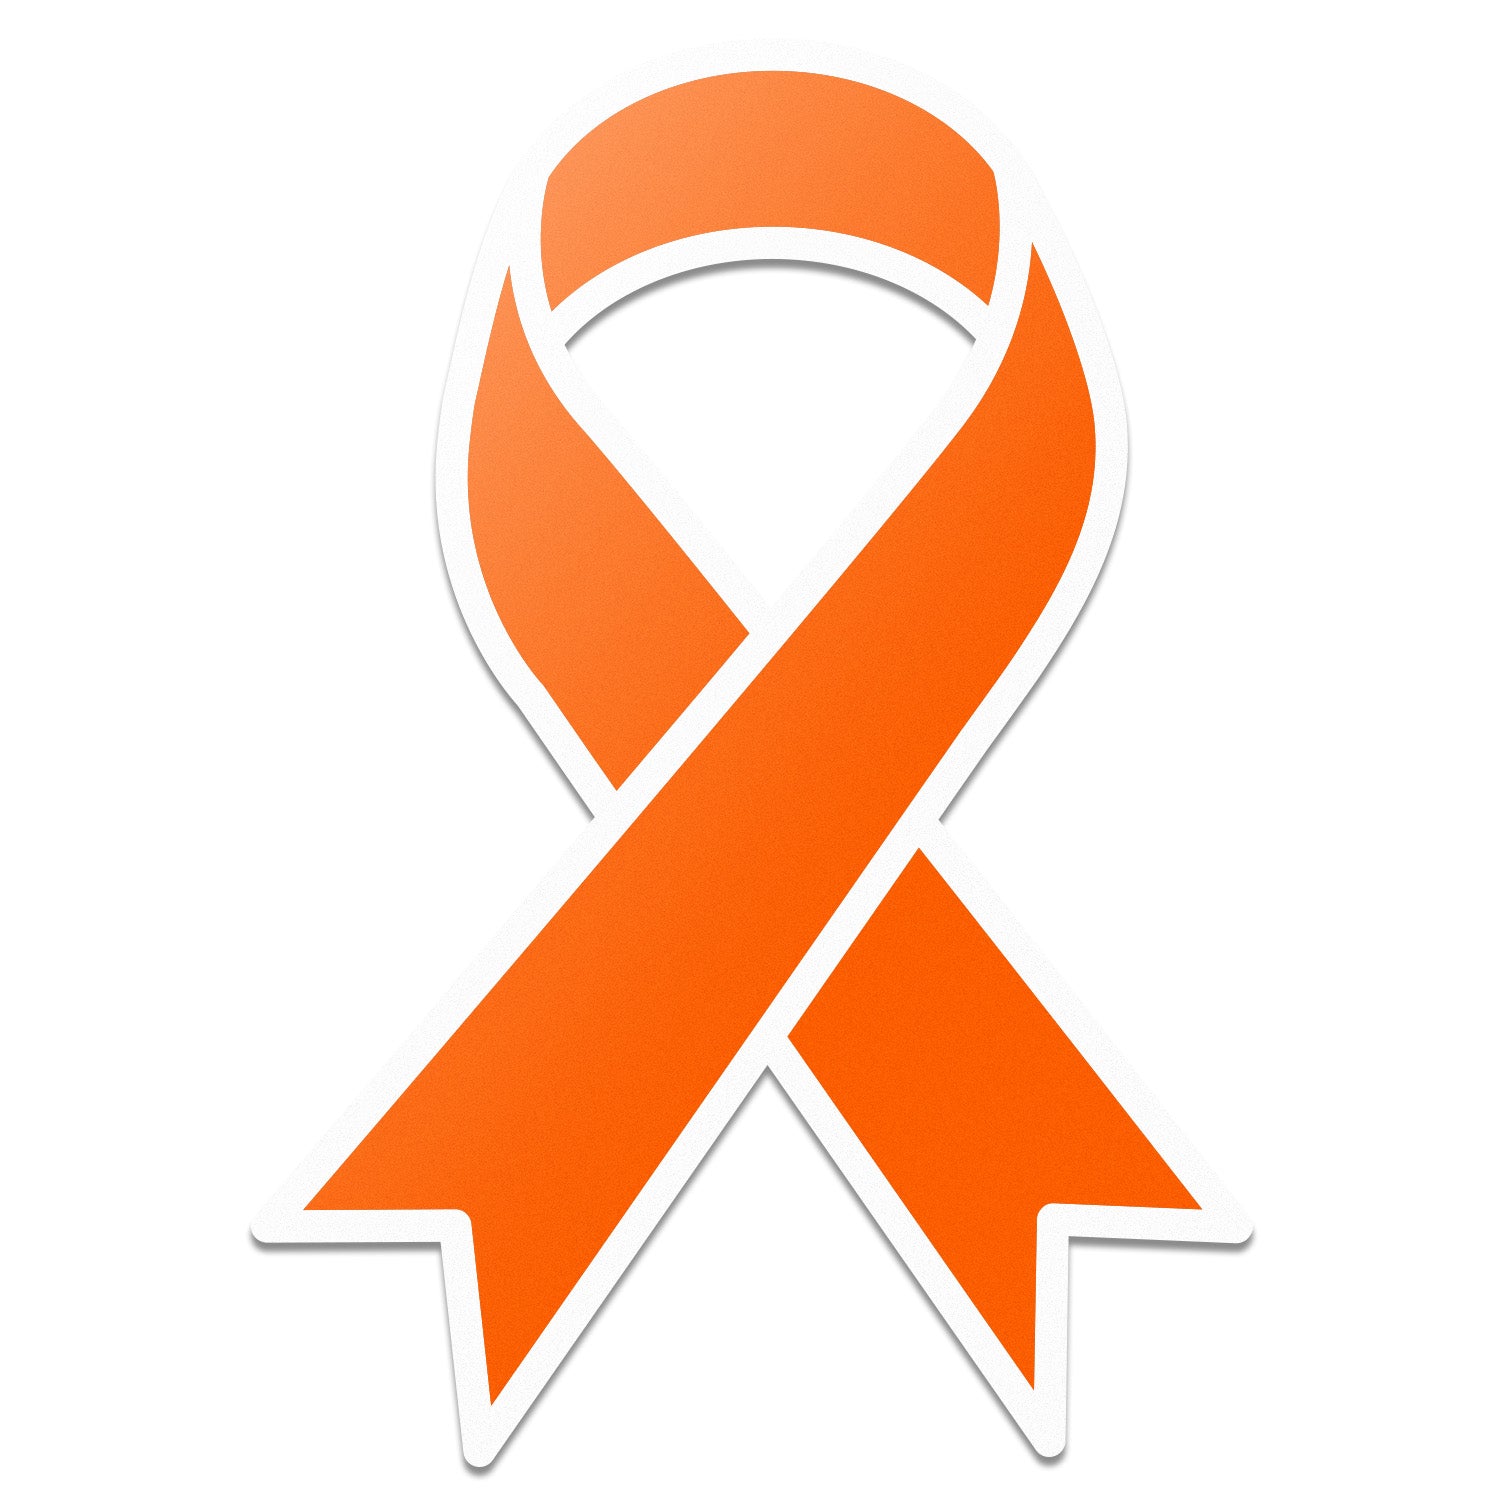 lymphoma awareness ribbon